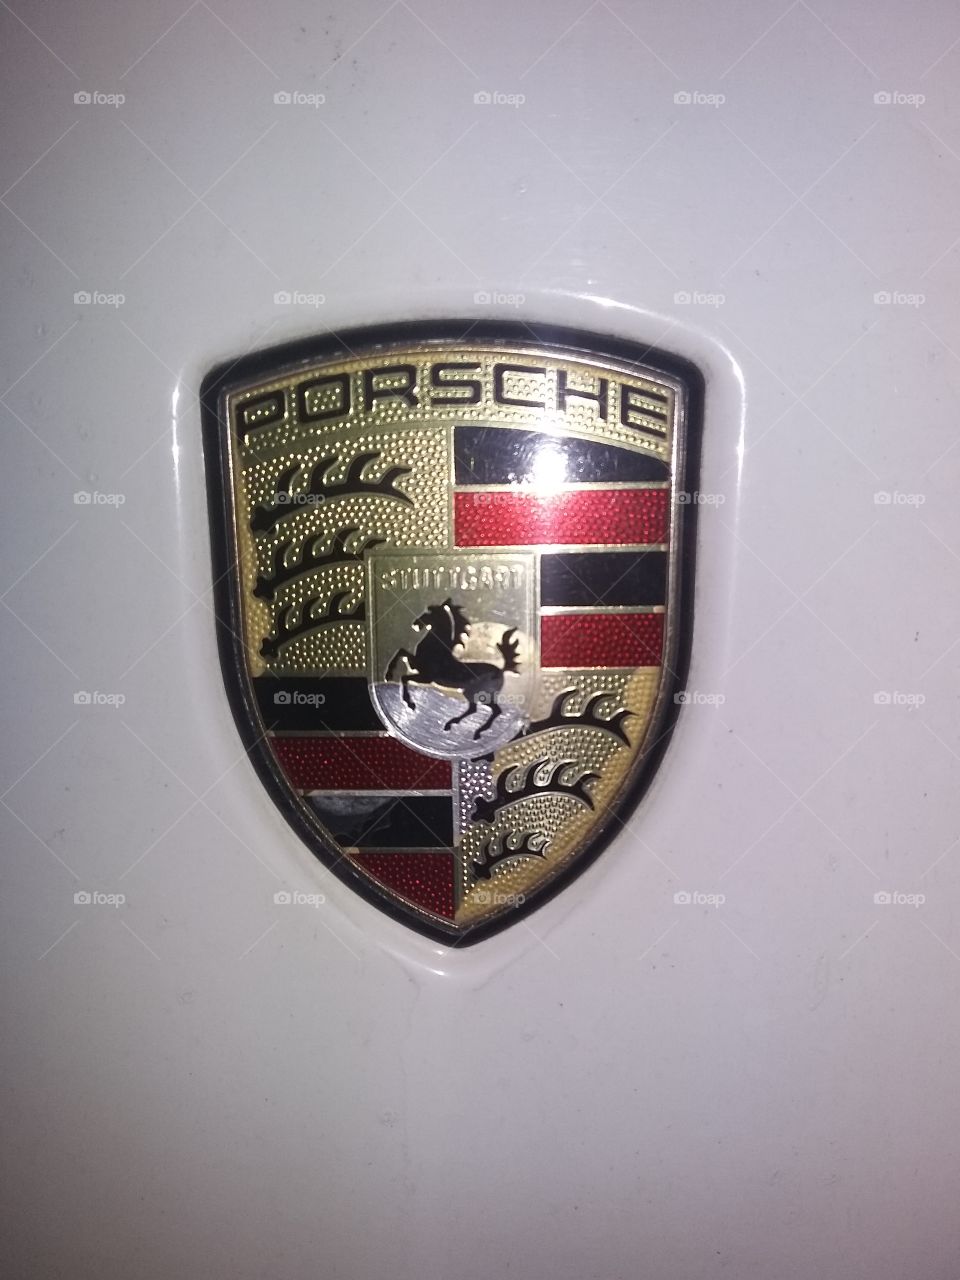 Porsche logo with white paint